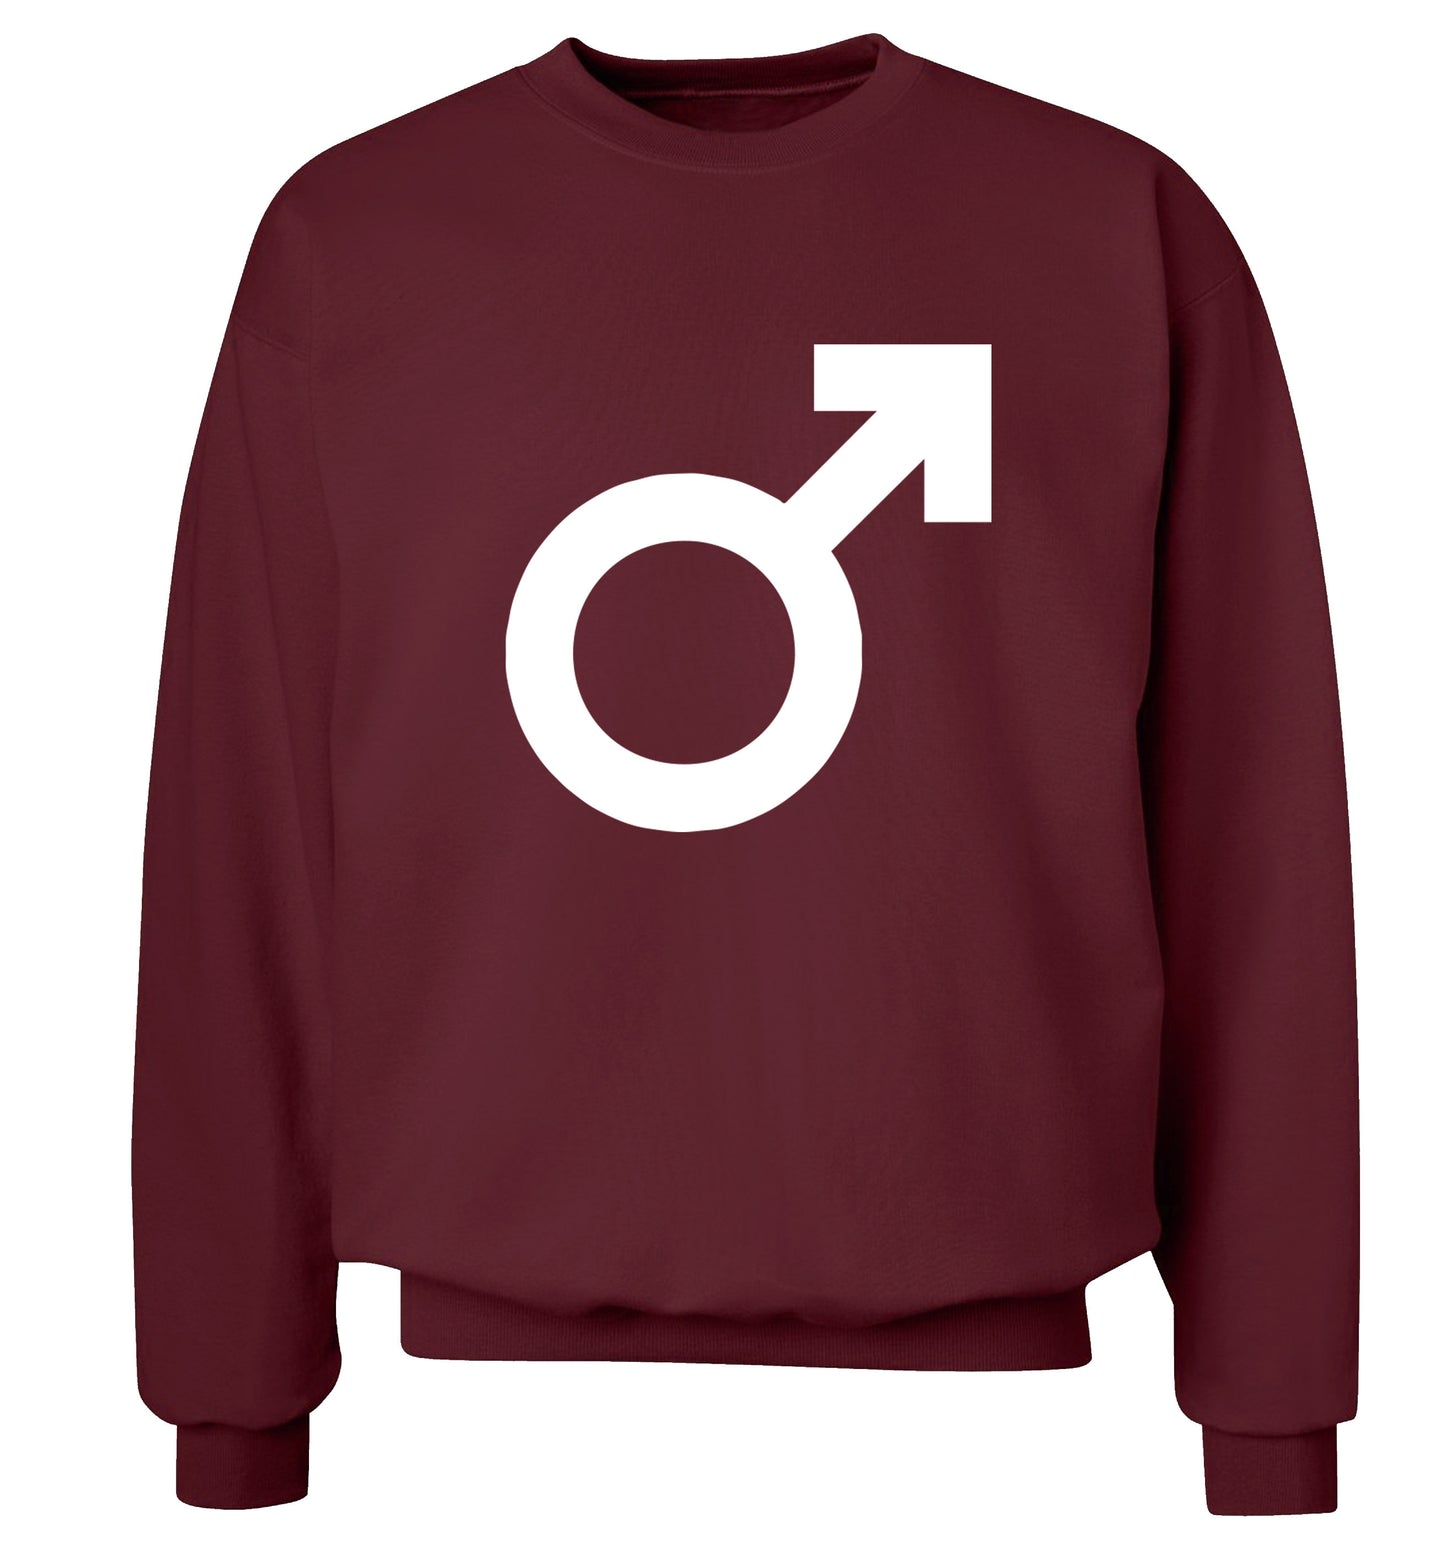 Male symbol large Adult's unisex maroon Sweater 2XL